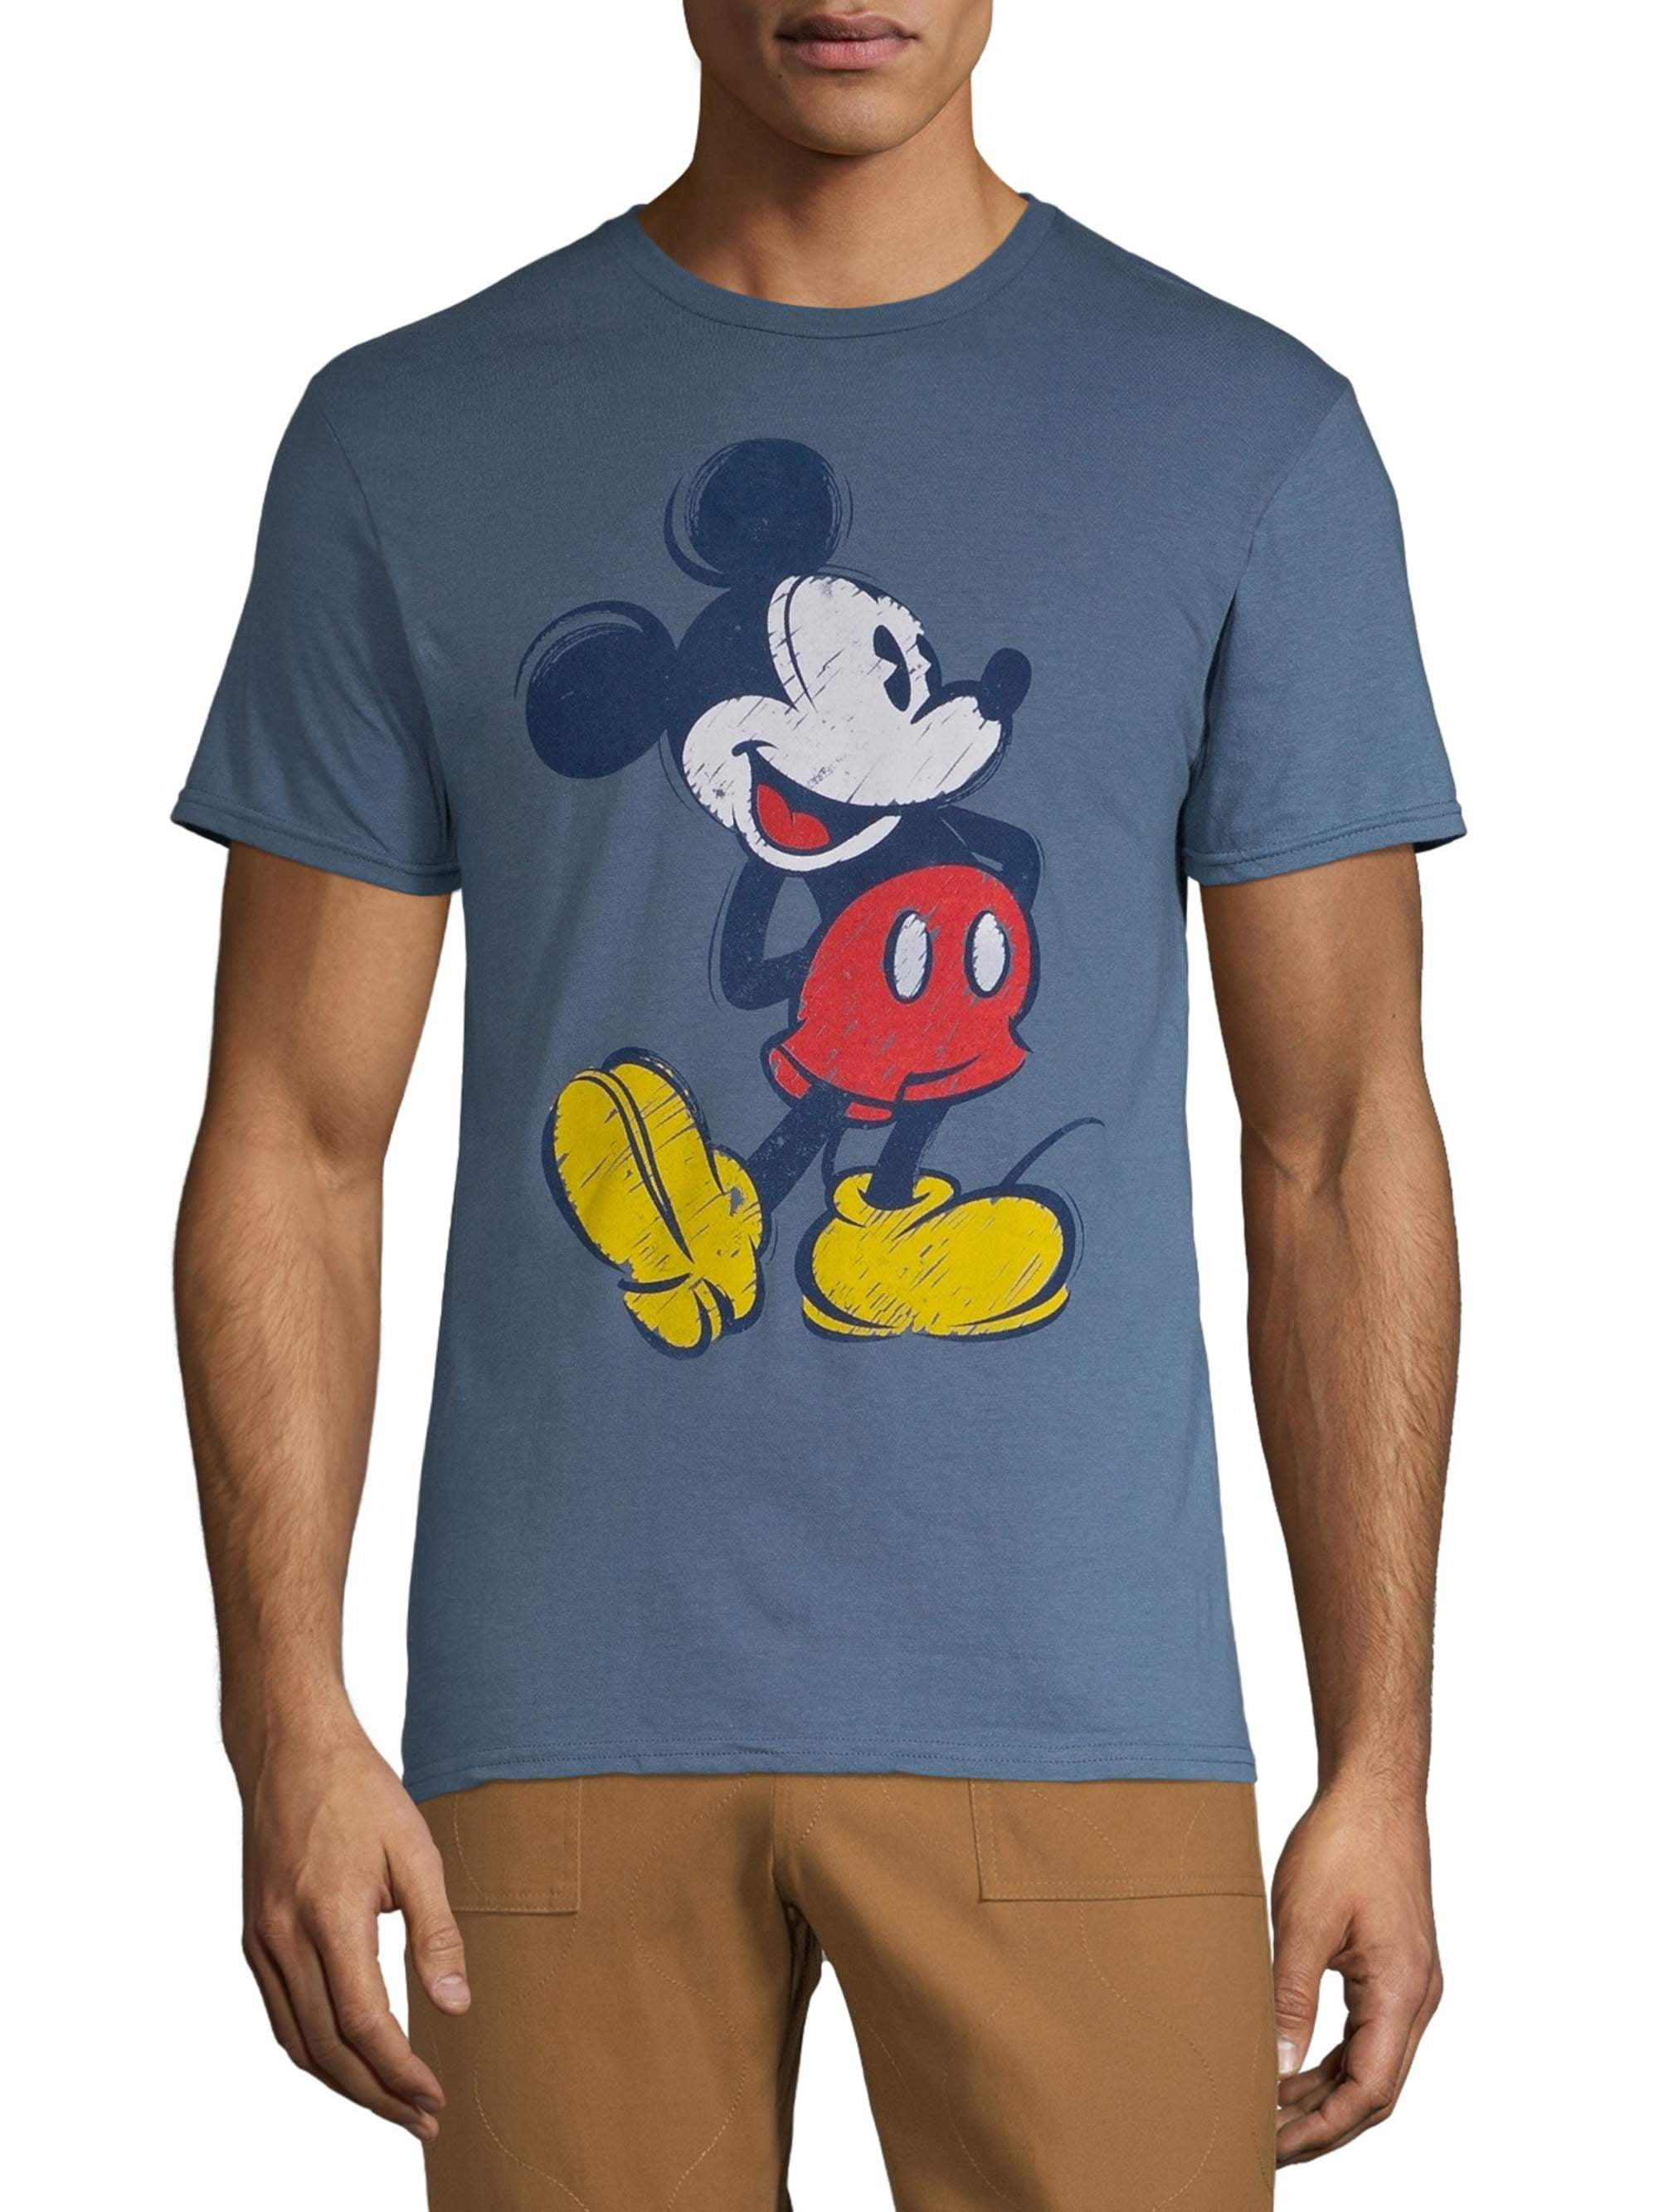 Mickey Mouse Polo ShirtBoys Mickey TeeDisney Mickey Mouse T-ShirtNEW 